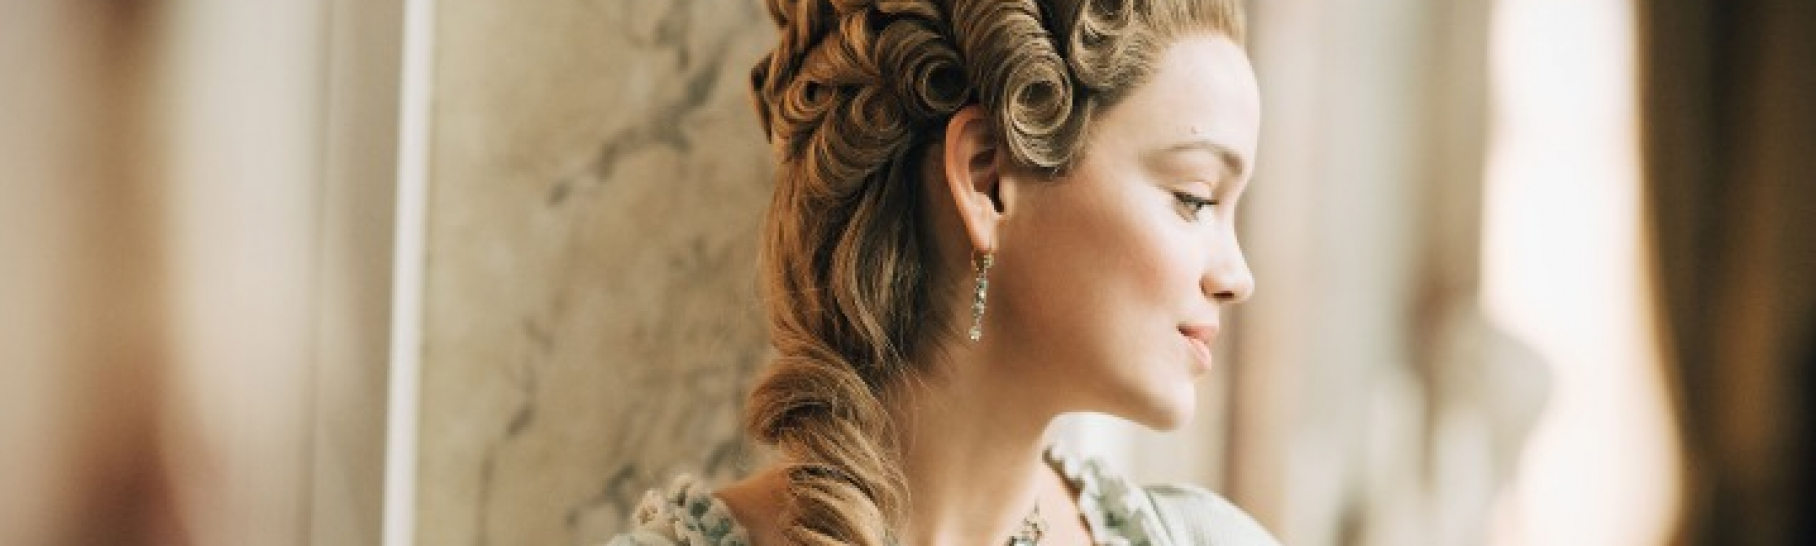 Emilia Schüle as Marie Antoinette